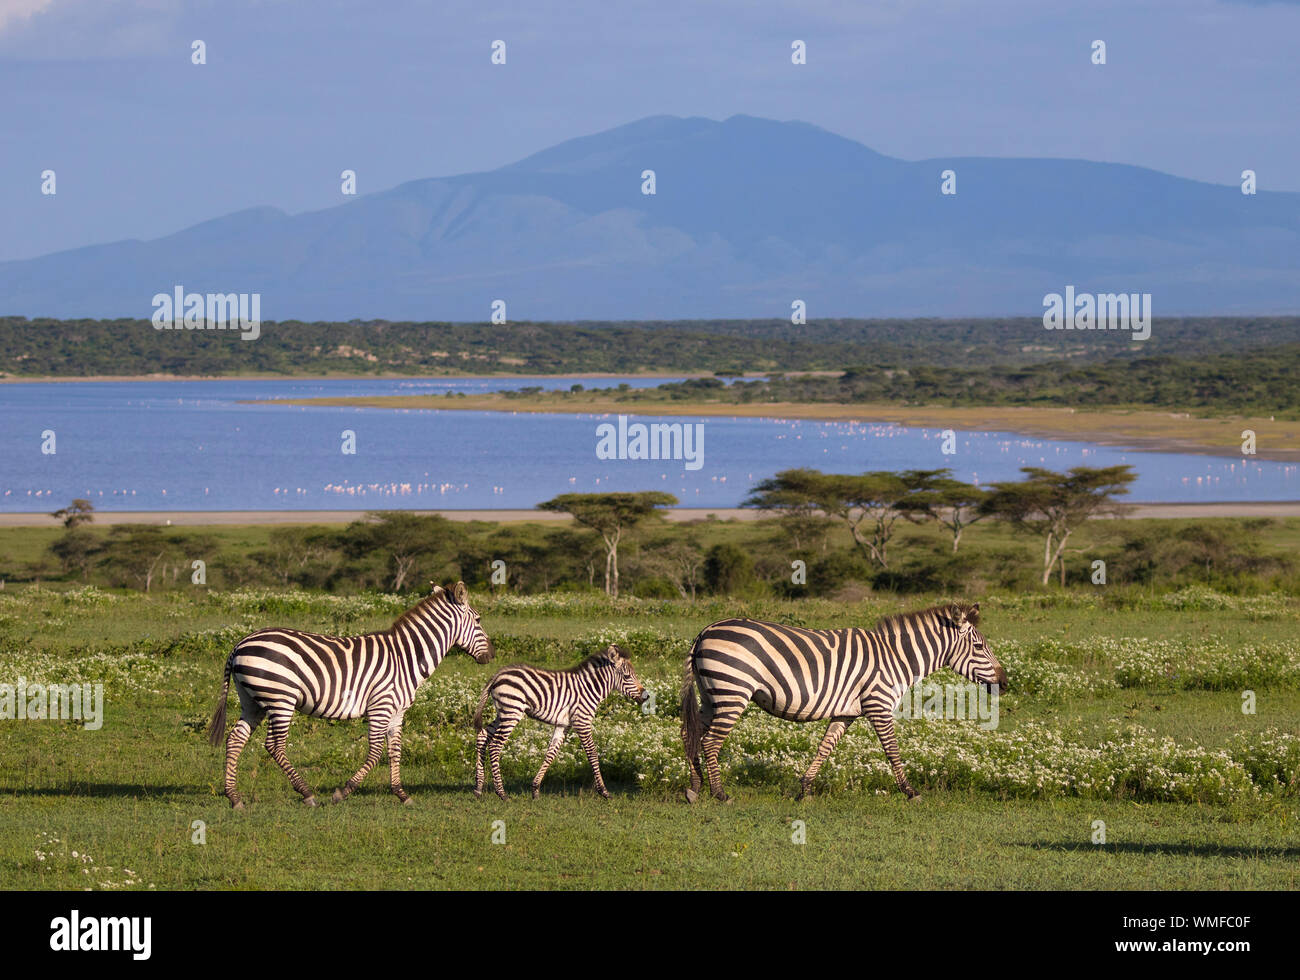 Plains oder Burchell's Zebra (Equus quagga) Gruppe mit Lake Ndutu im Hintergrund, Ndutu, Ngorongoro Conservation Area, südliche Serengeti, Tansania. Stockfoto